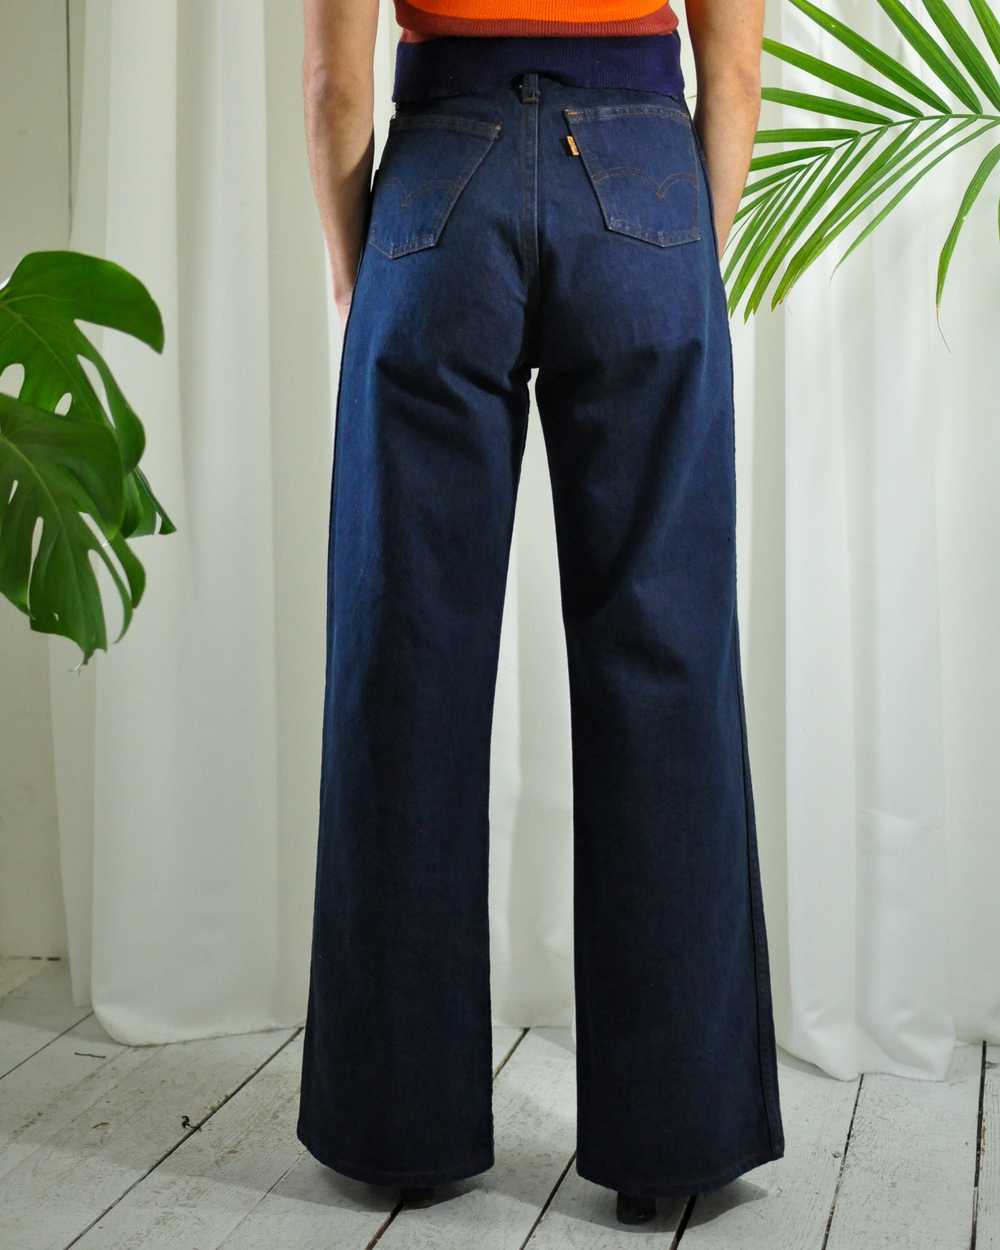 70s High Waist Bellbottom Jeans - image 5